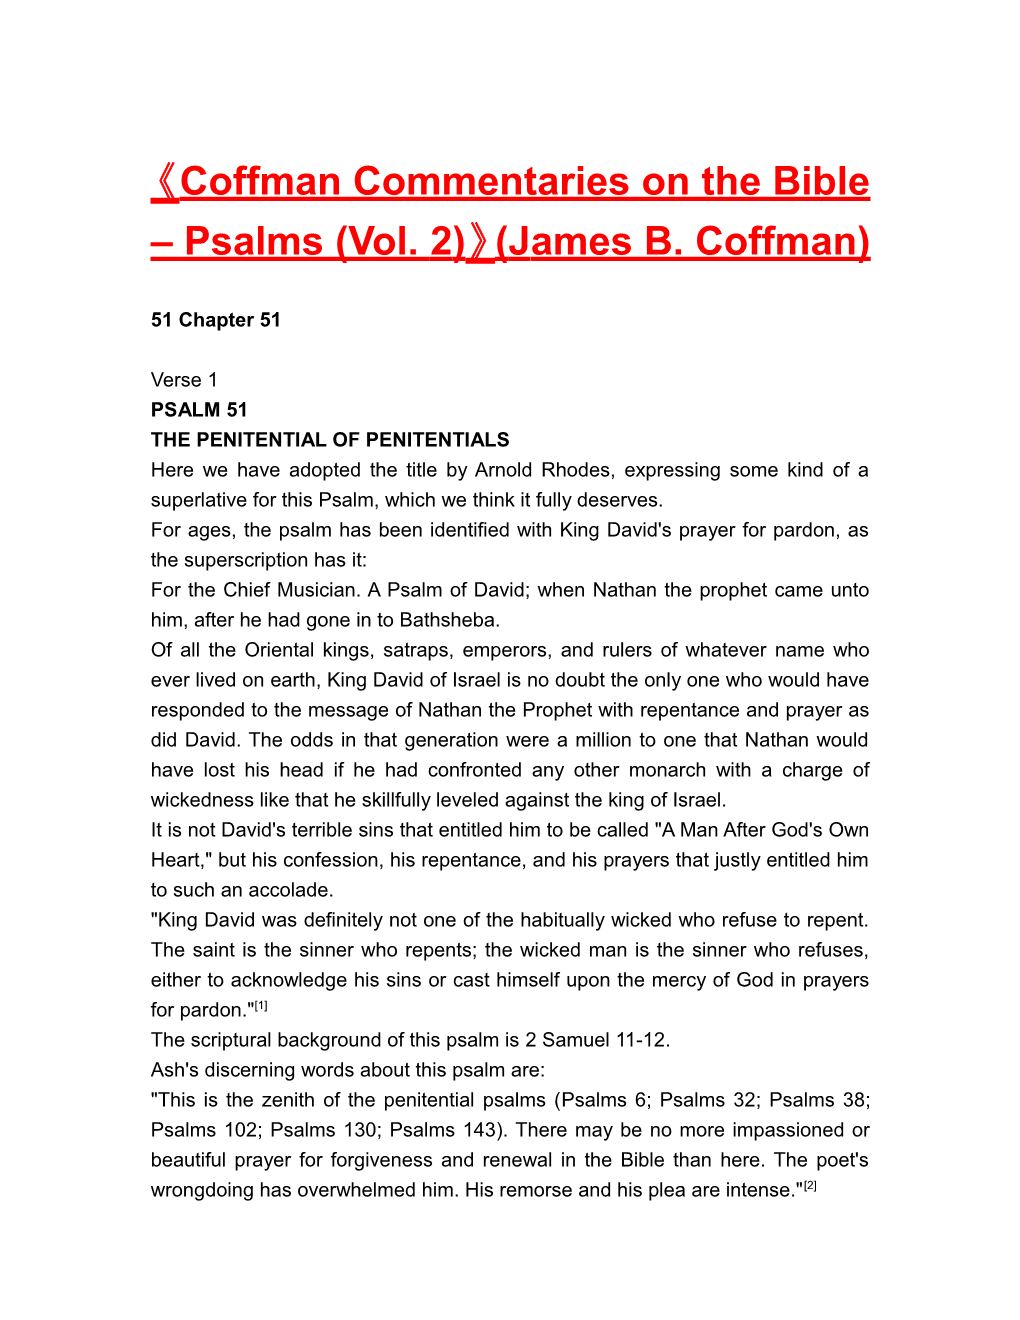 Coffman Commentaries on the Bible Psalms (Vol. 2) (James B. Coffman)